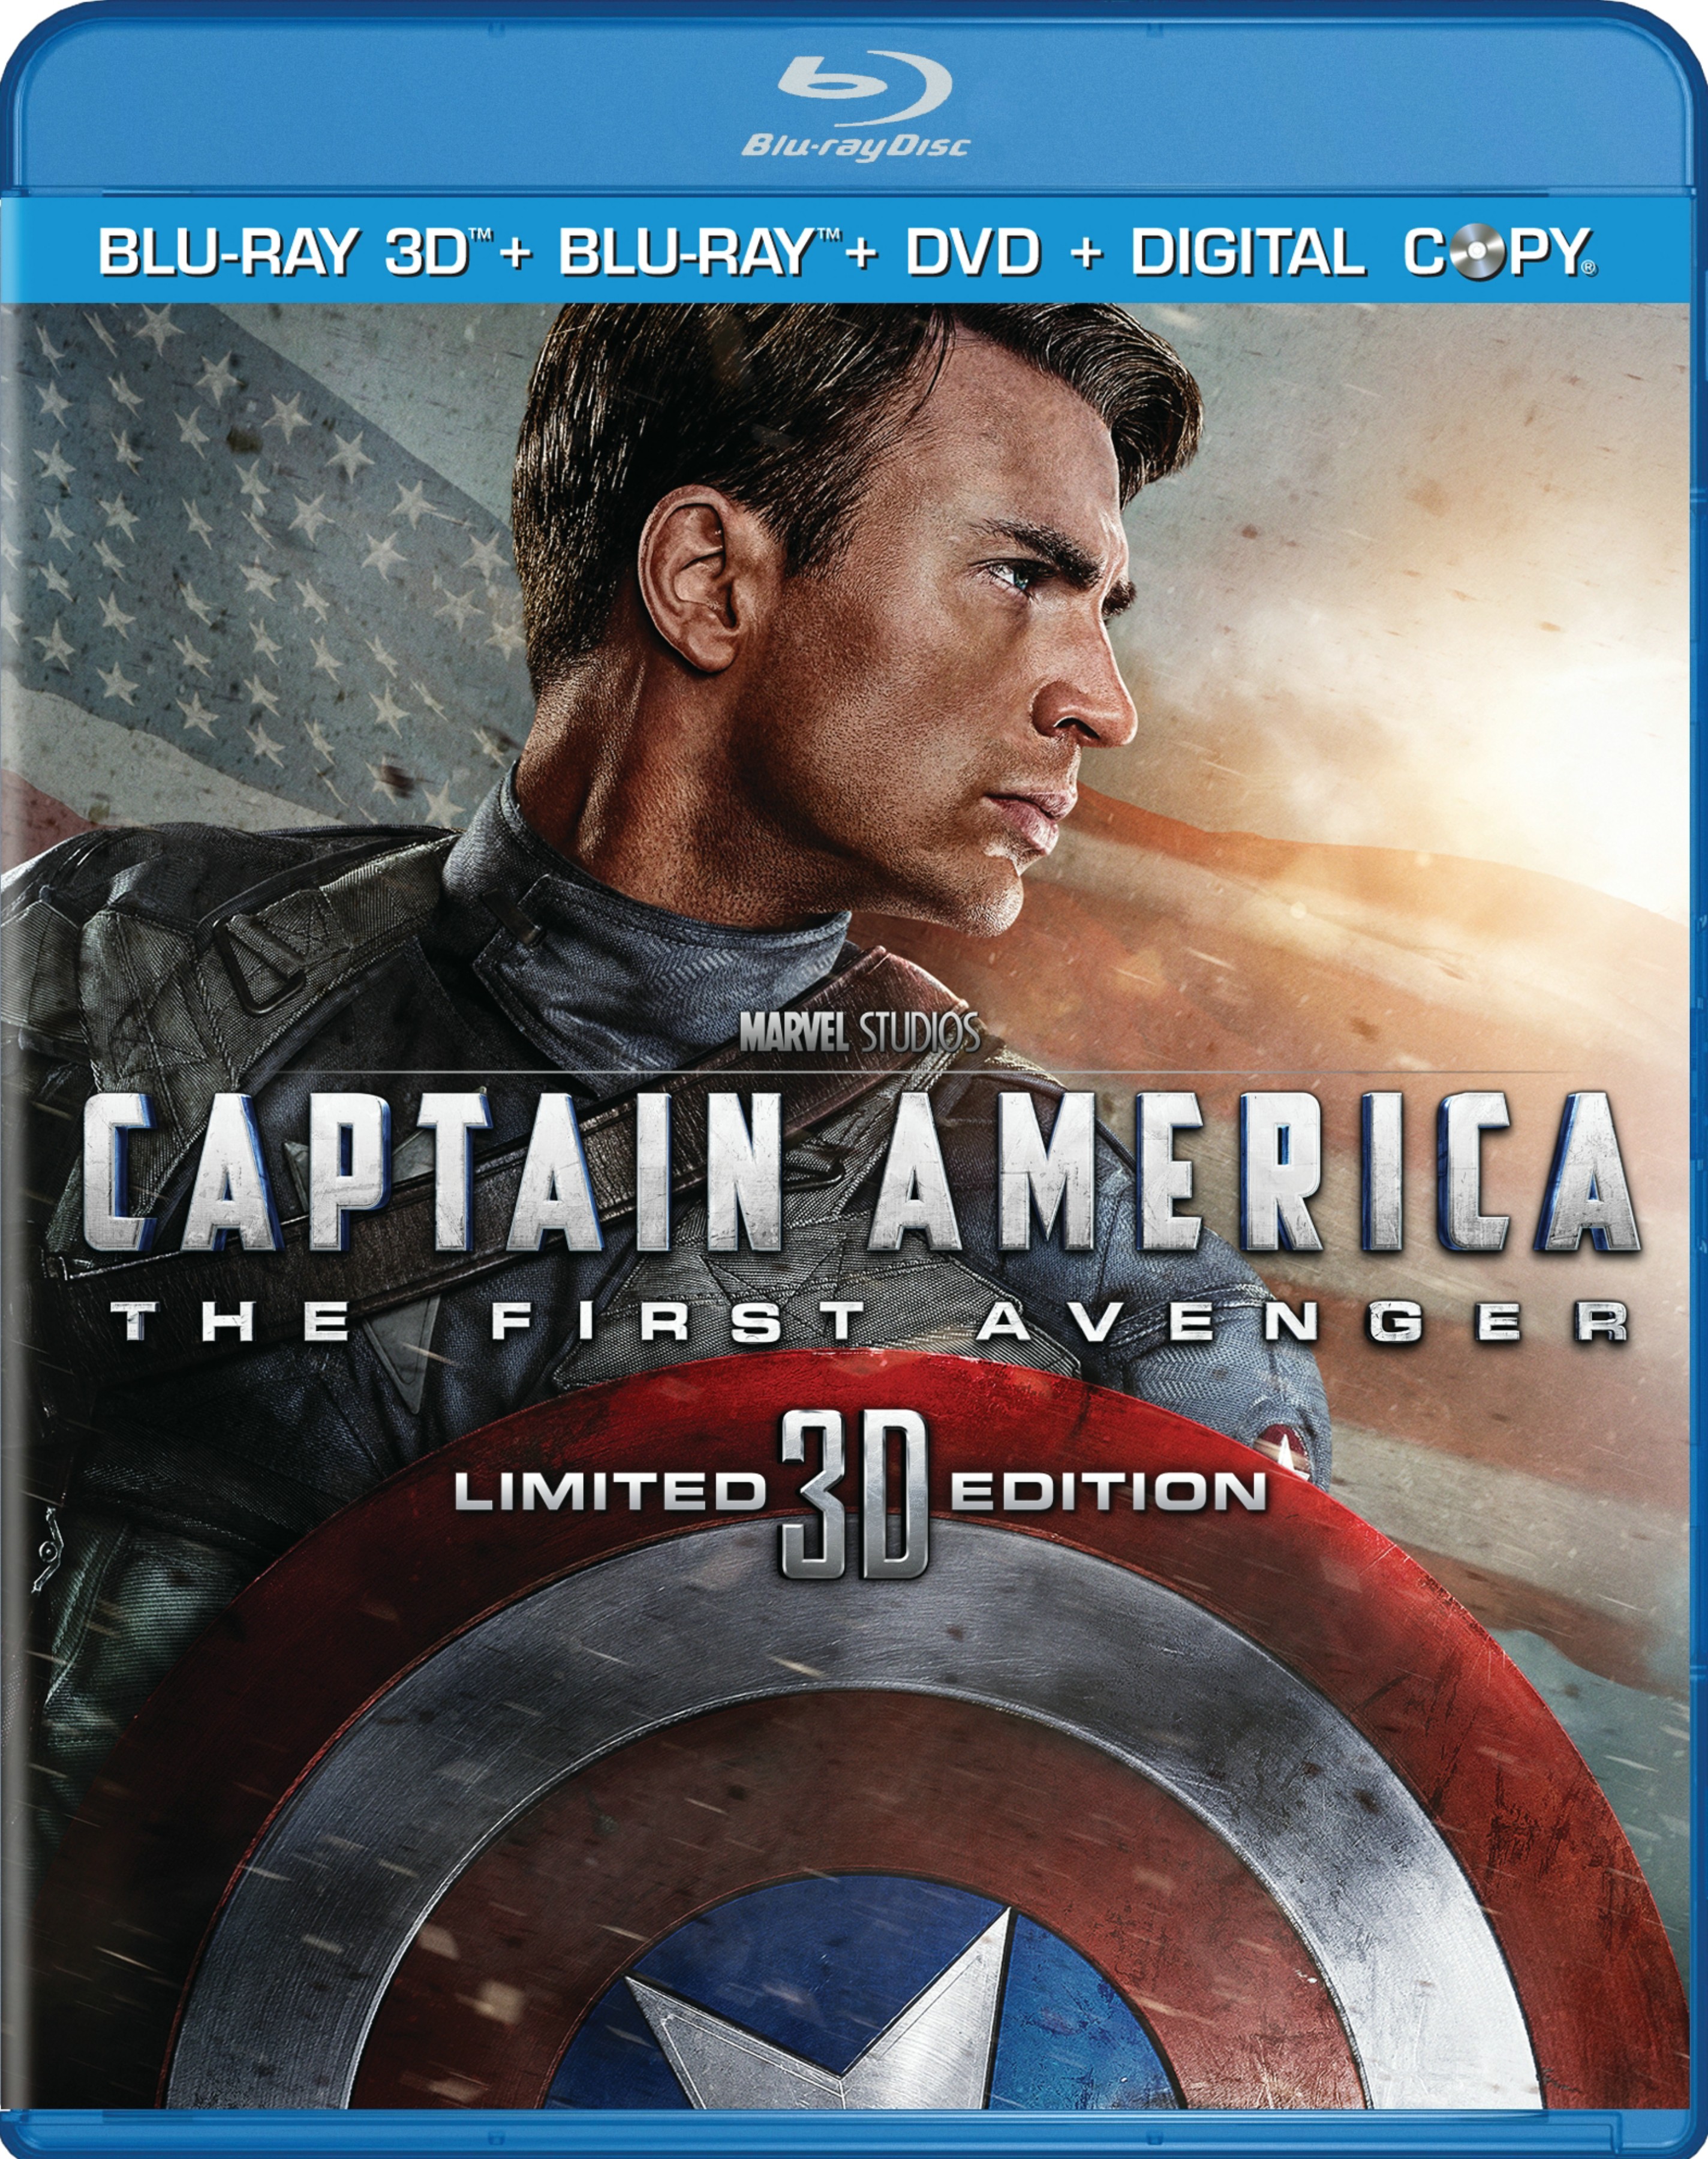 captain america 1 full movie online free